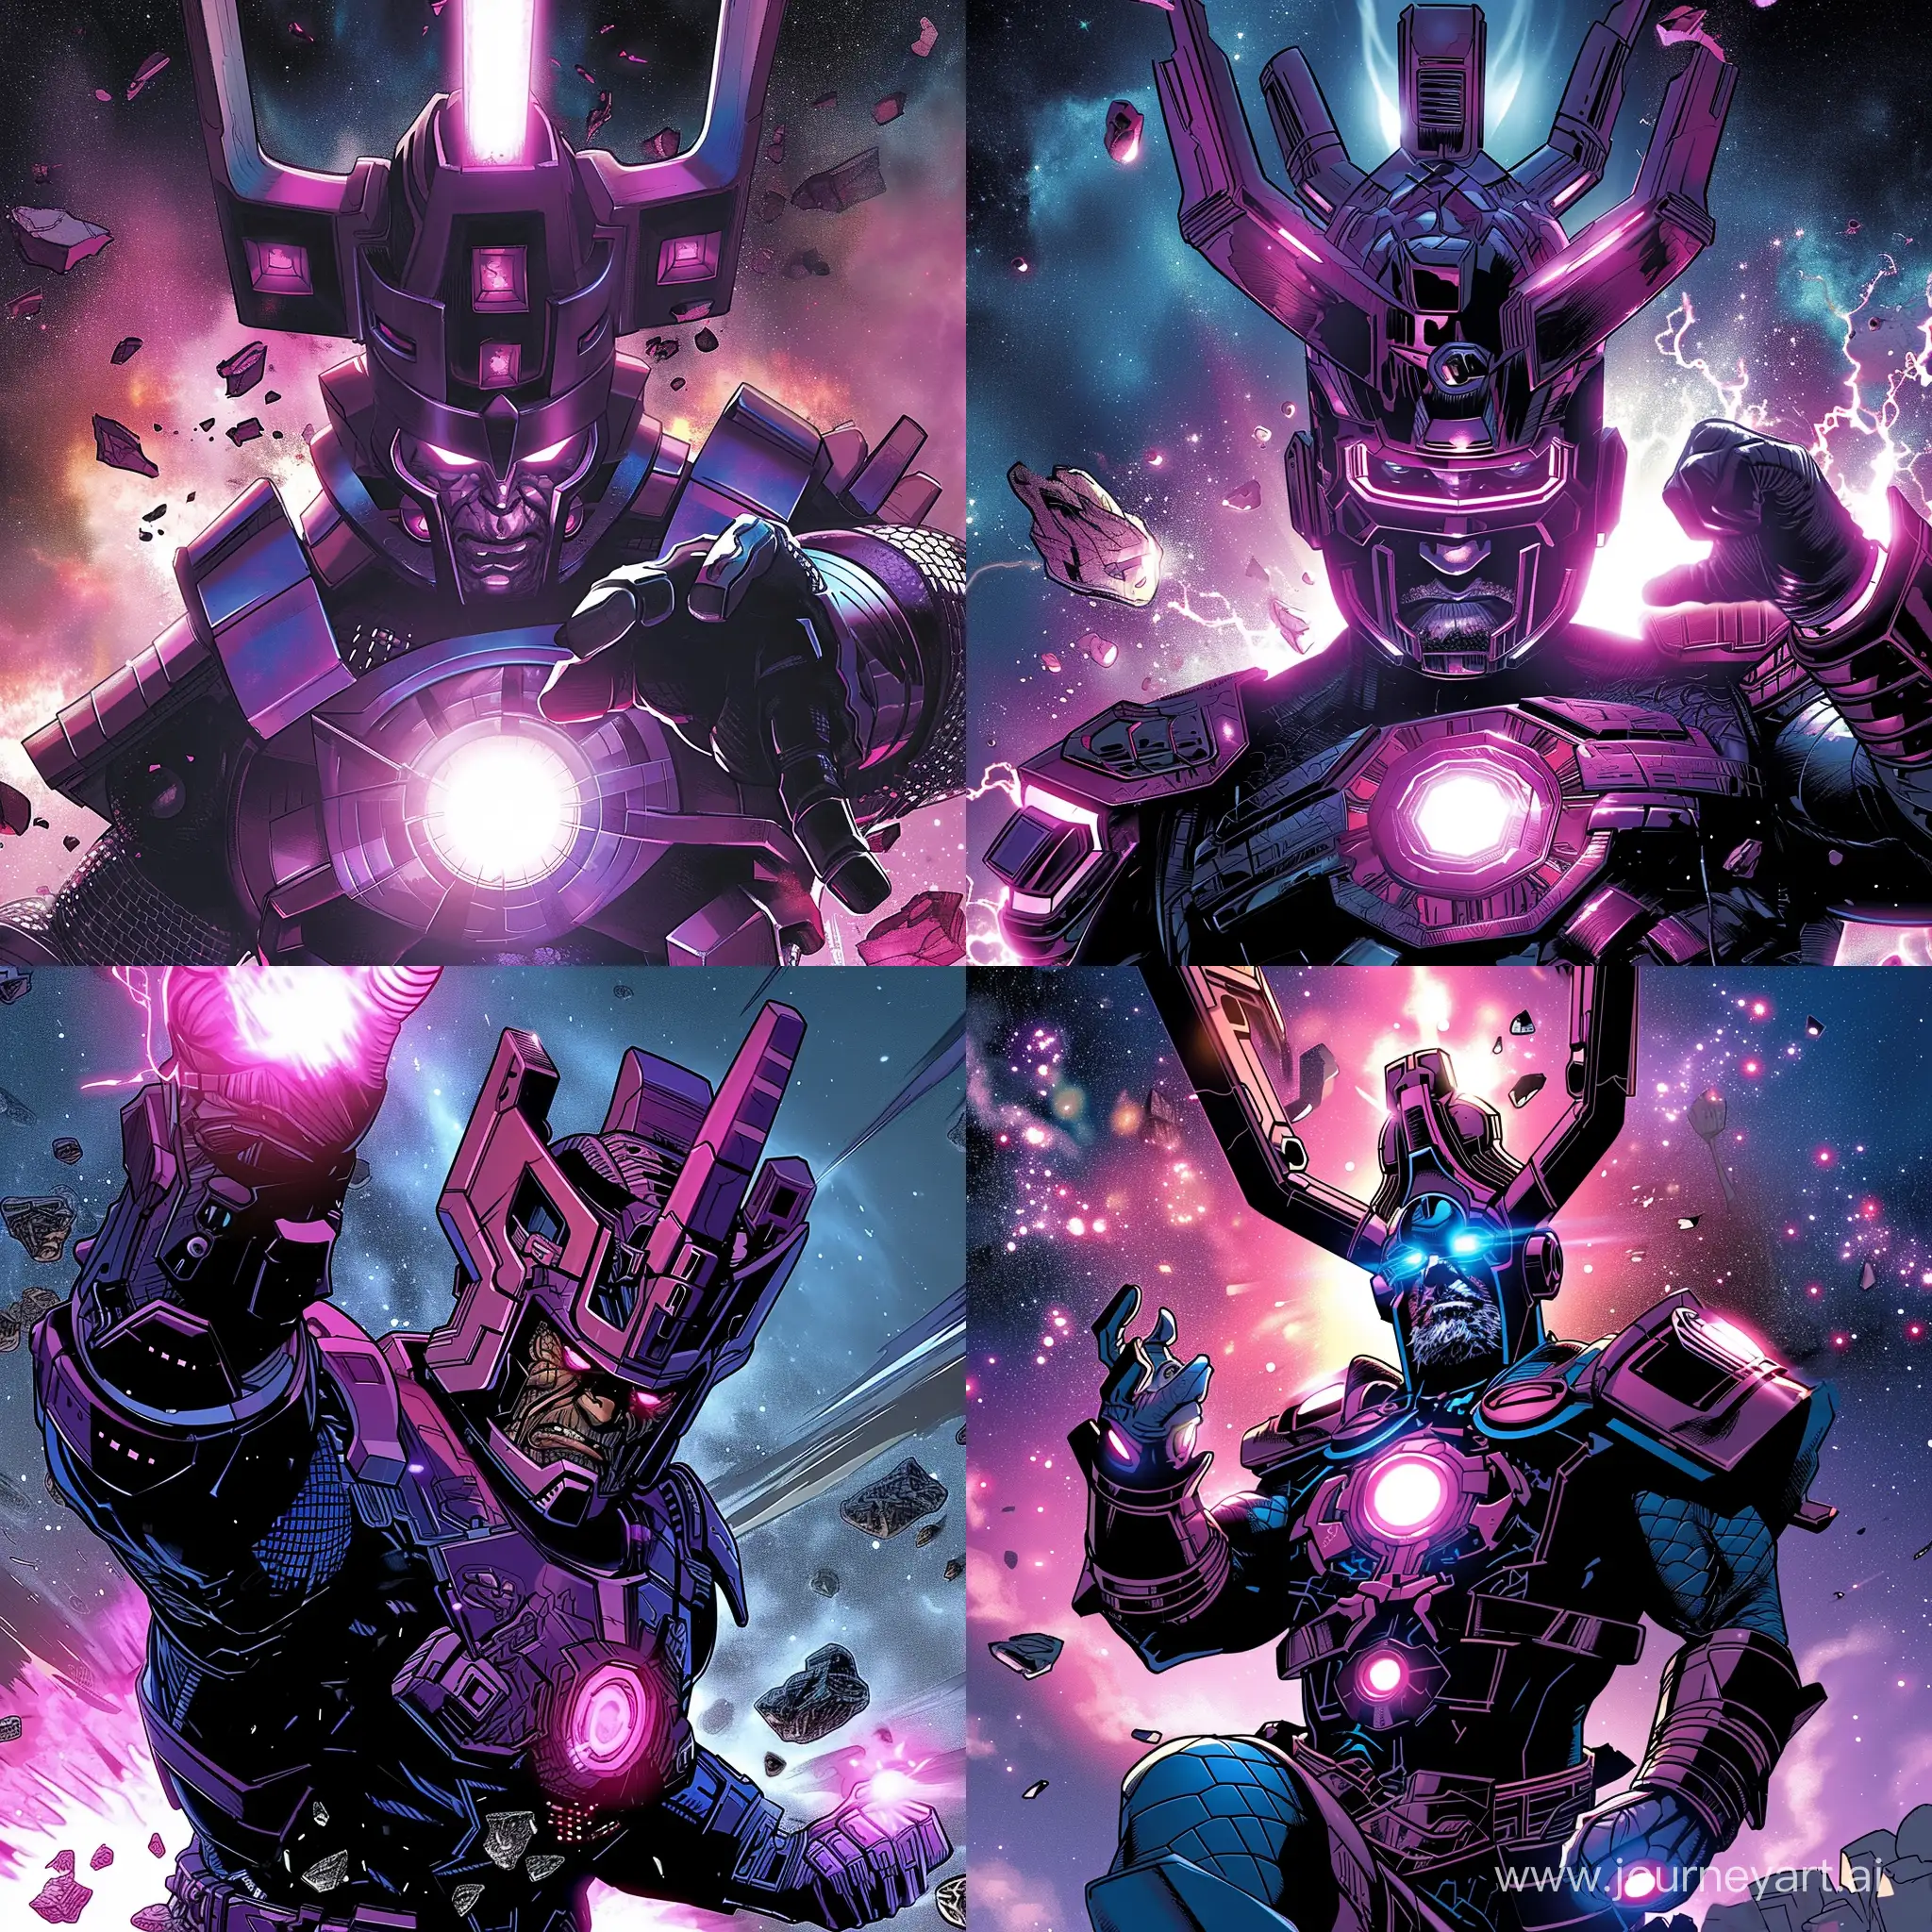 Christopher-Judge-Portrays-Marvel-Comics-Galactus-in-Striking-Image